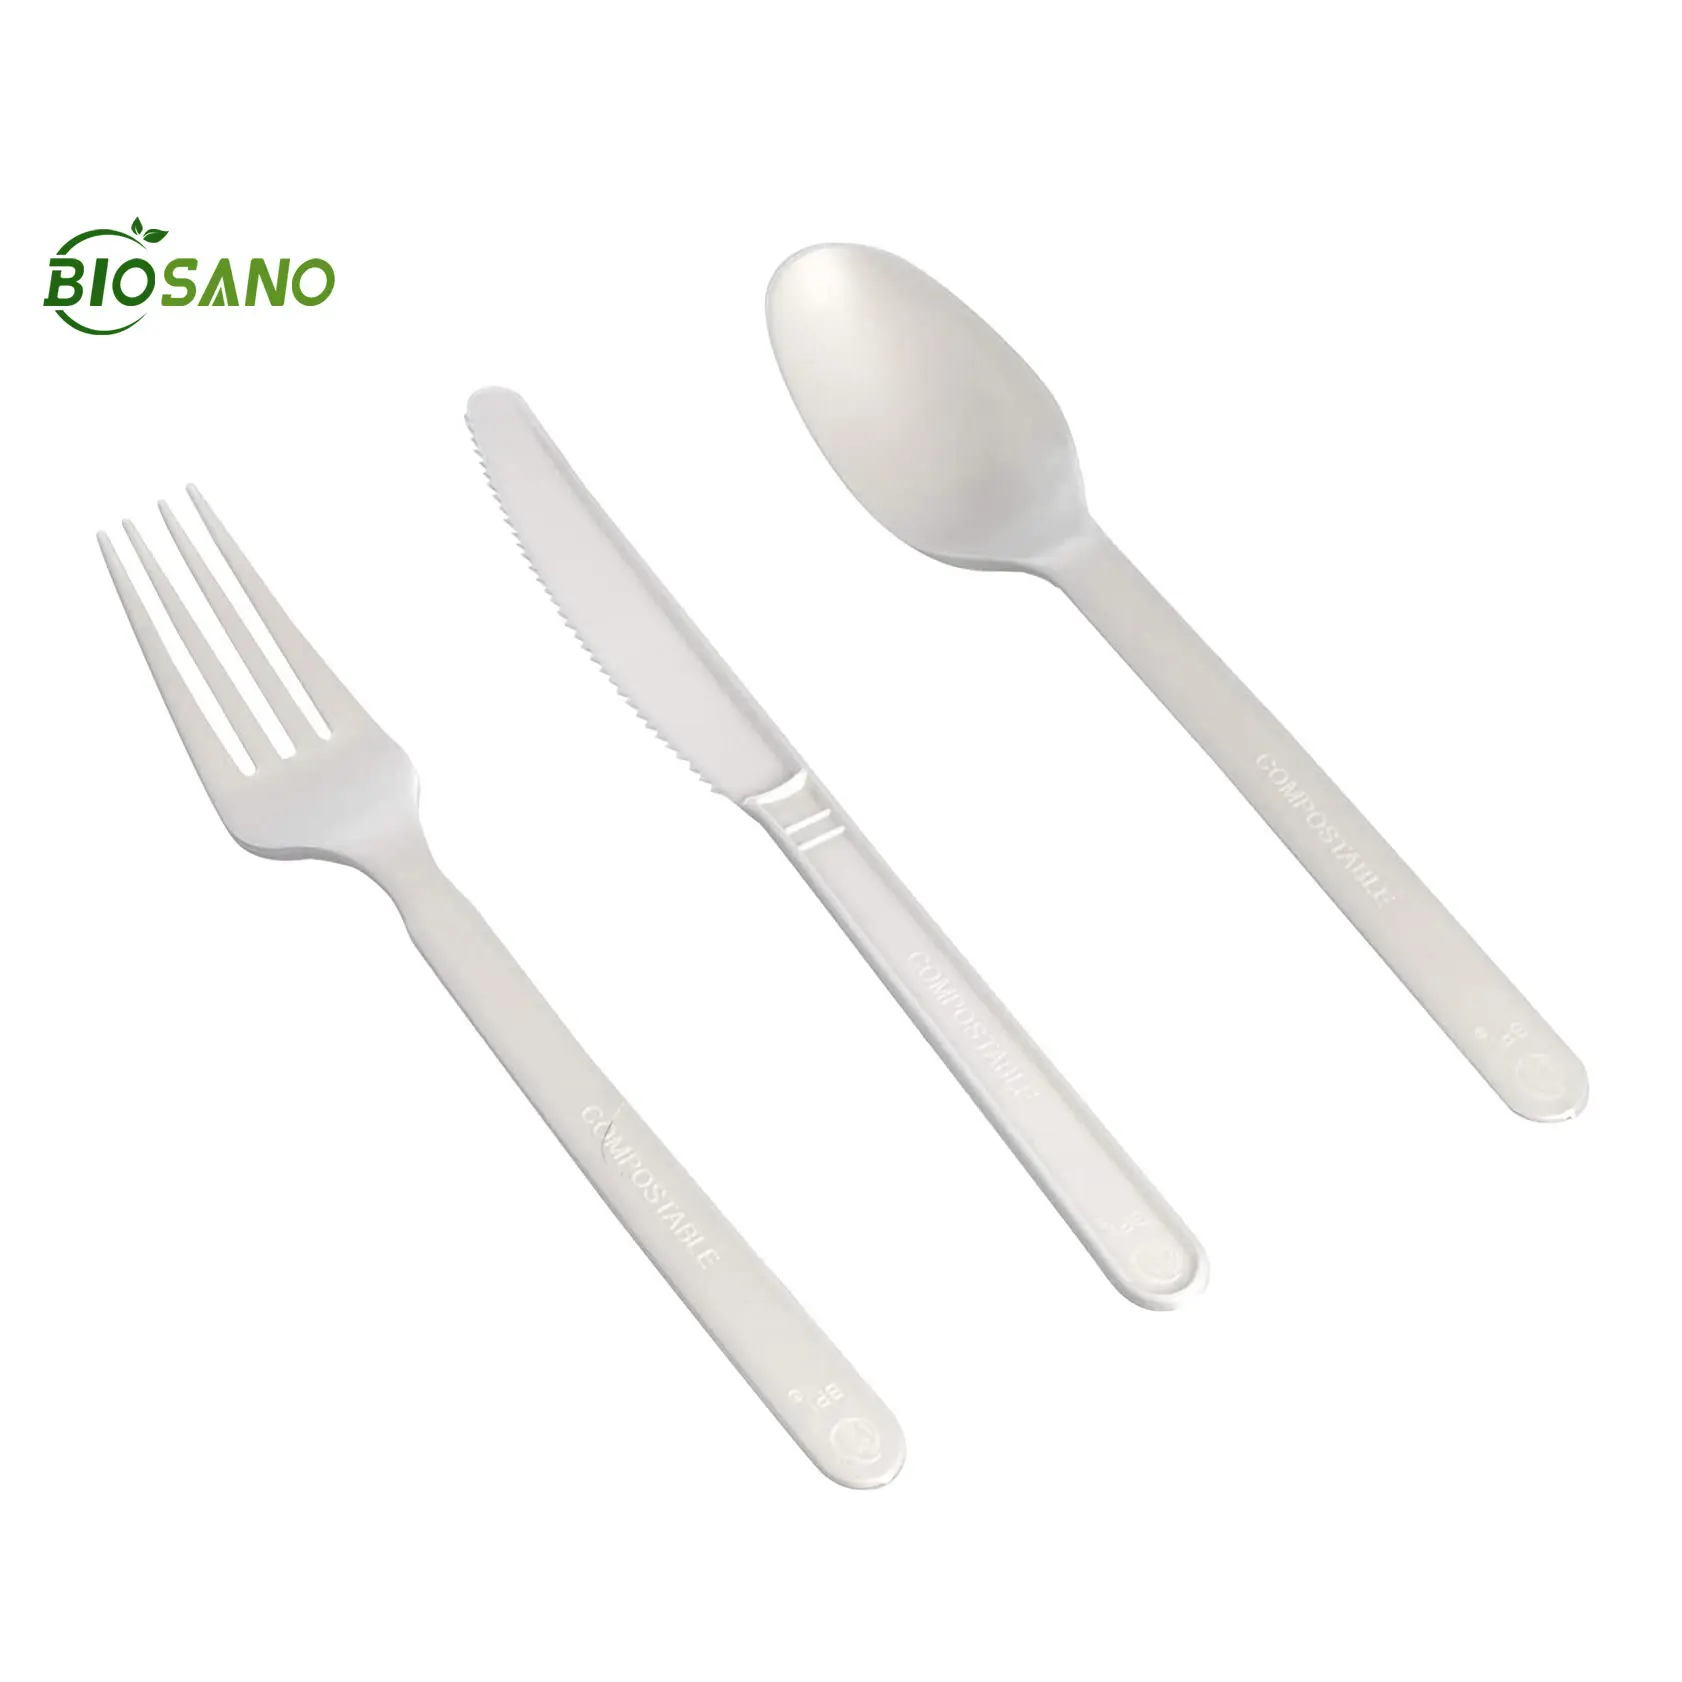 Biosano ชุดช้อนส้อมและช้อนส้อมพลาสติก,แบบใช้แล้วทิ้งย่อยสลายได้ทางชีวภาพจานแต่งงานขนาดเล็กชุดเครื่องใช้บนโต๊ะอาหาร